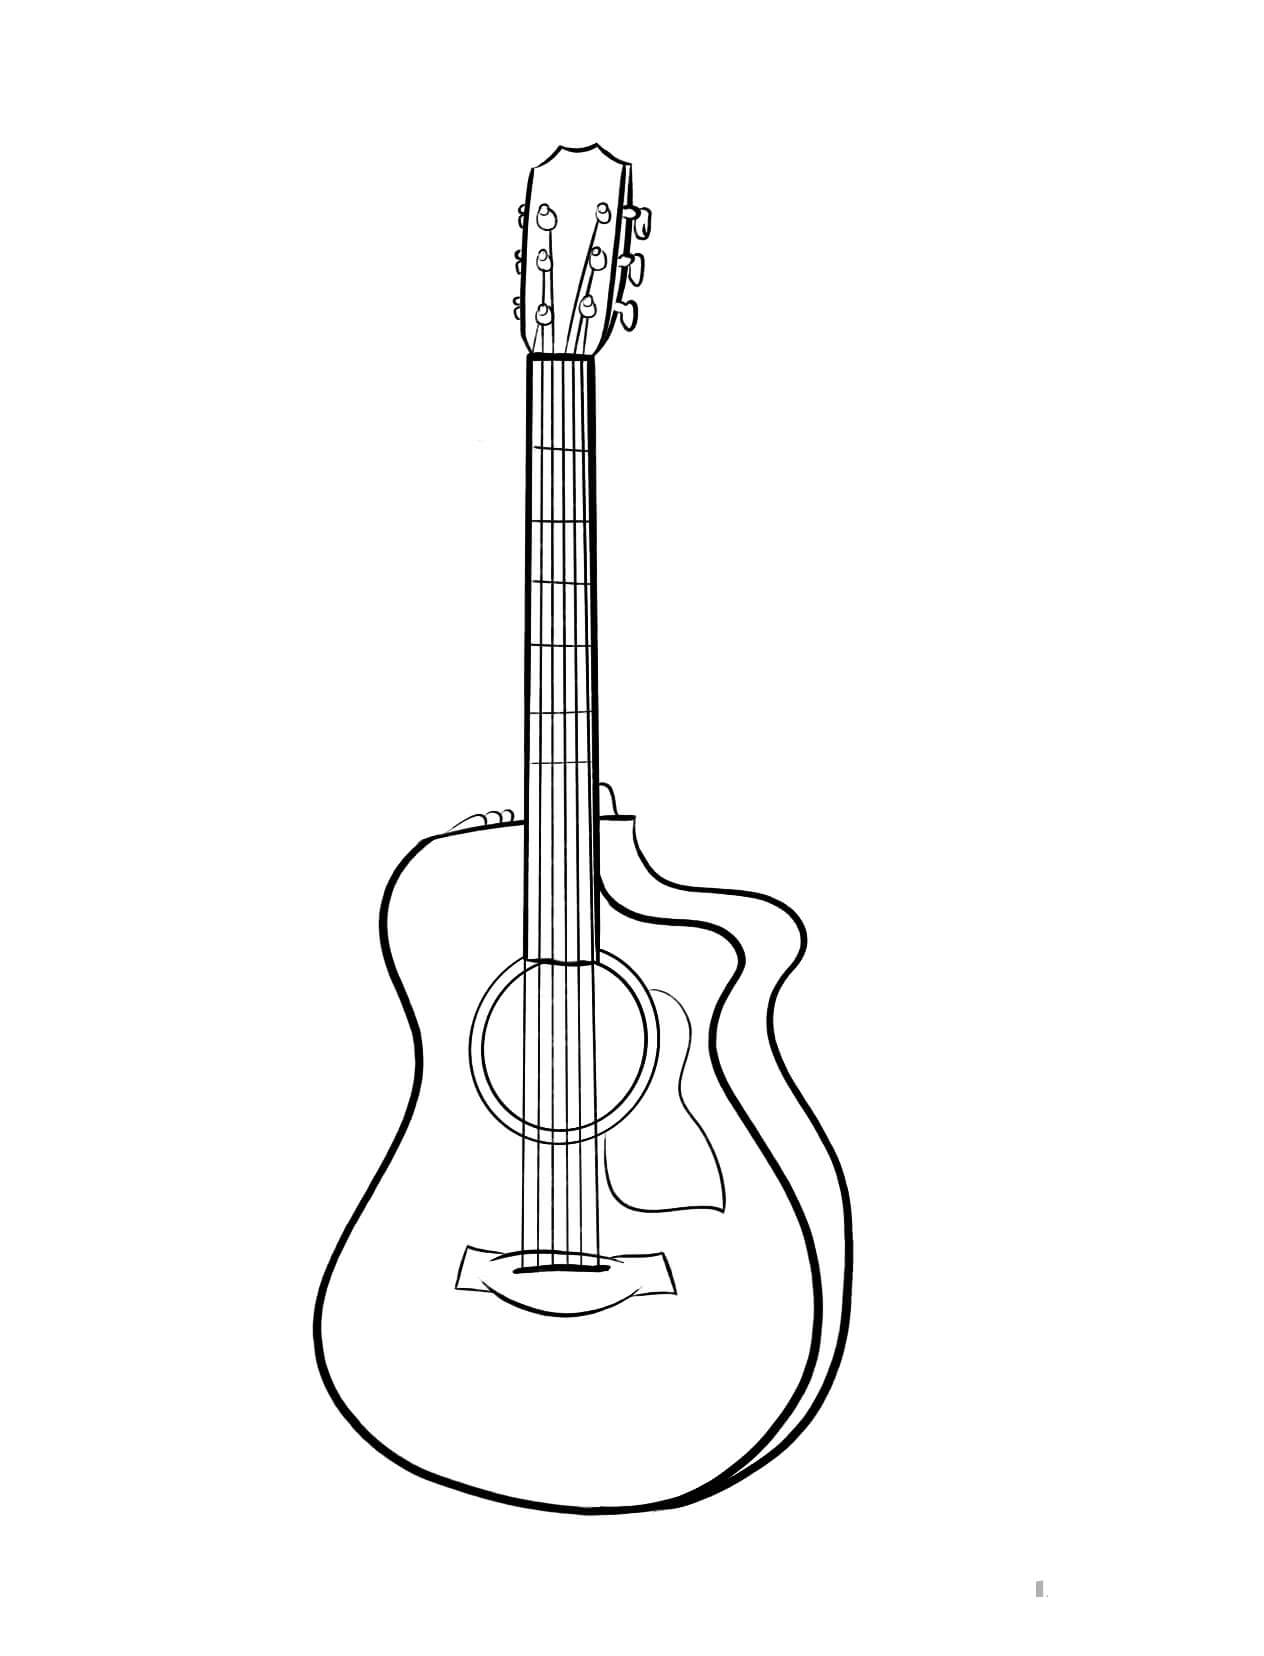 Guitare Gratuite coloring page